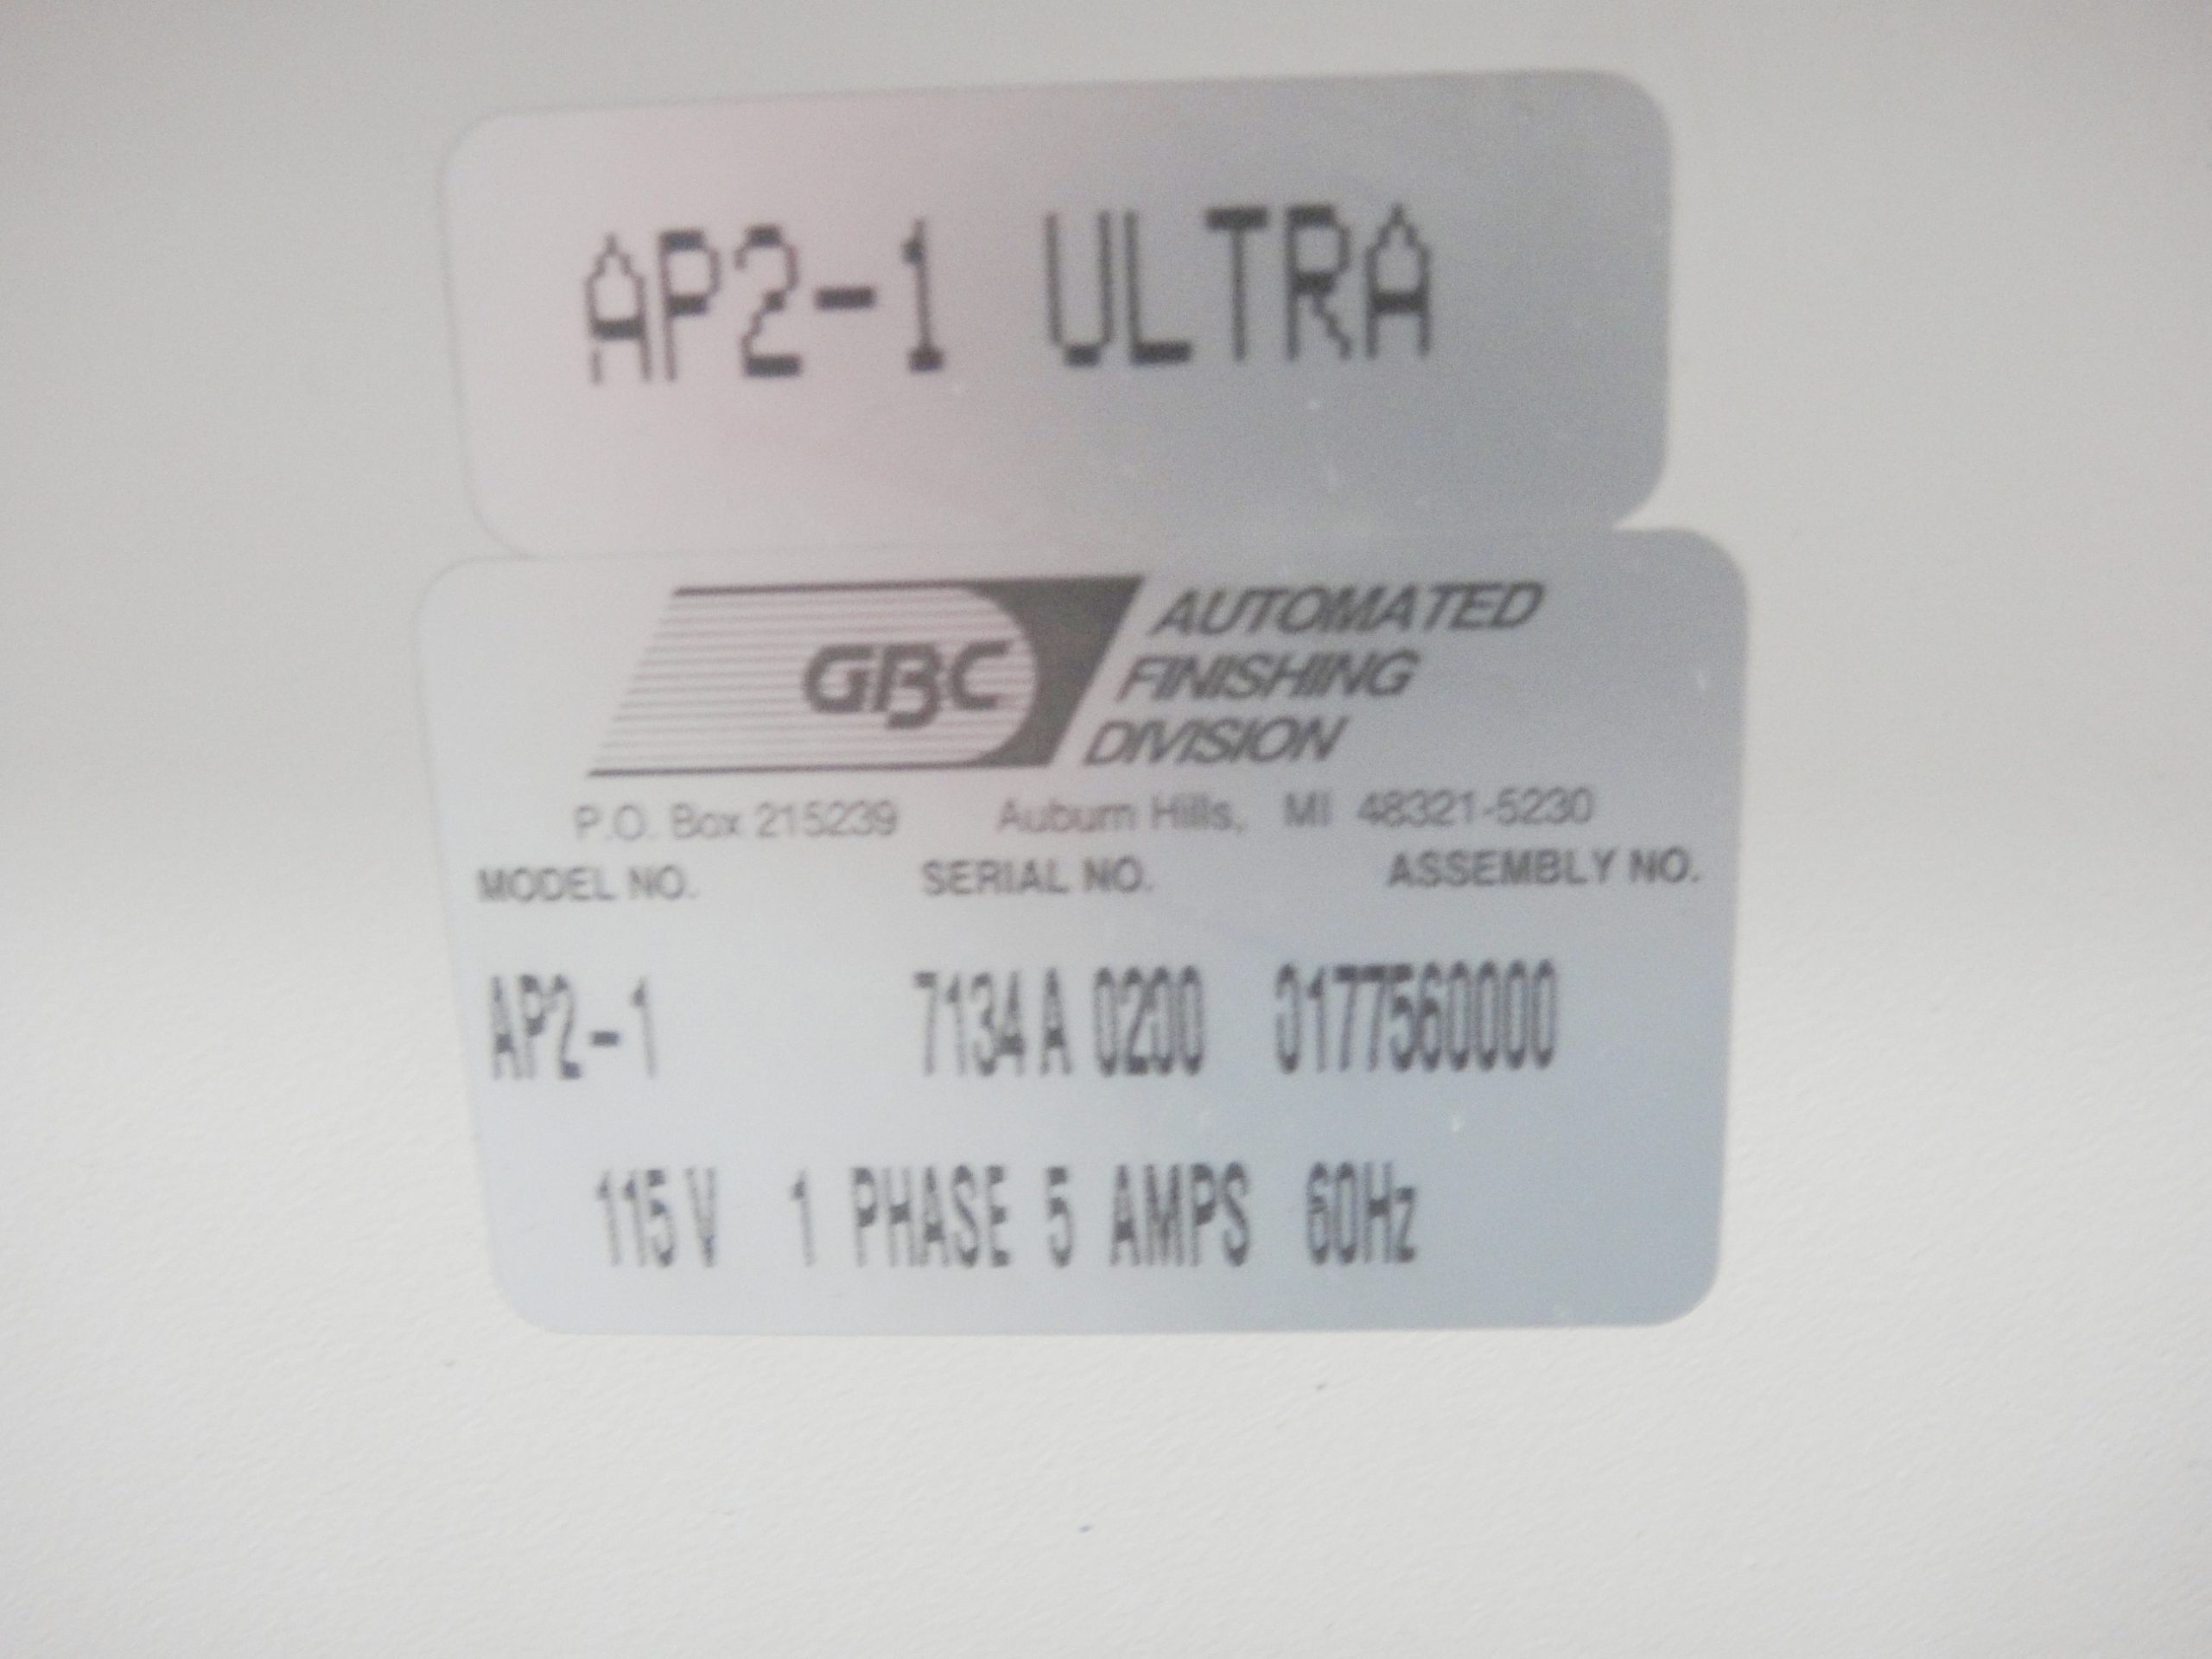 GBC AP 2 Ultra Punch (Used) Item # UBE-43 (NC)